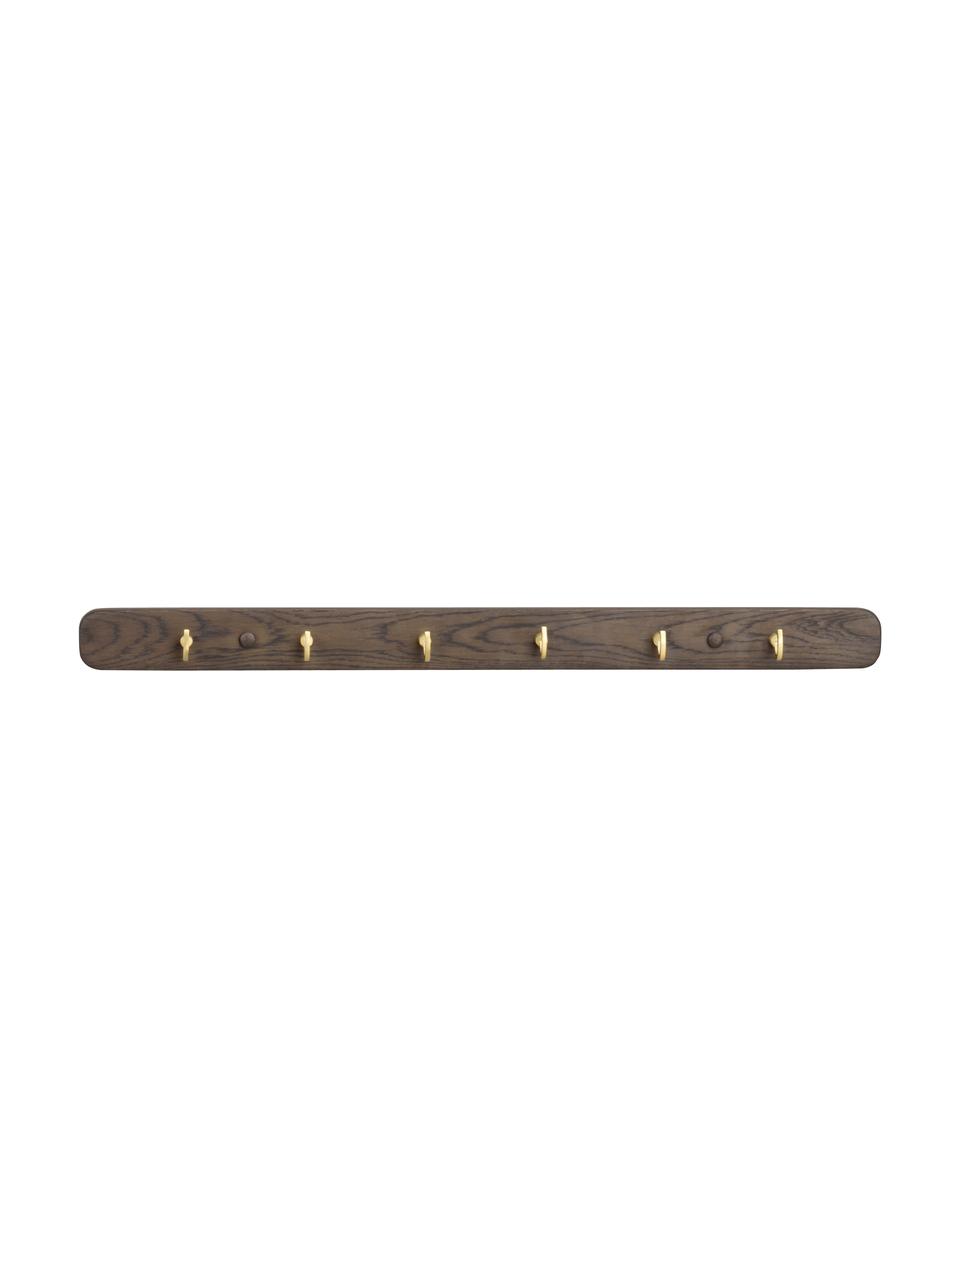 Garderobenleiste Inverness aus Eichenholz, Leiste: Eichenholz, braun lackier, Haken: Metall, beschichtet, Eichenholz, braun lackiert, B 65 x H 5 cm